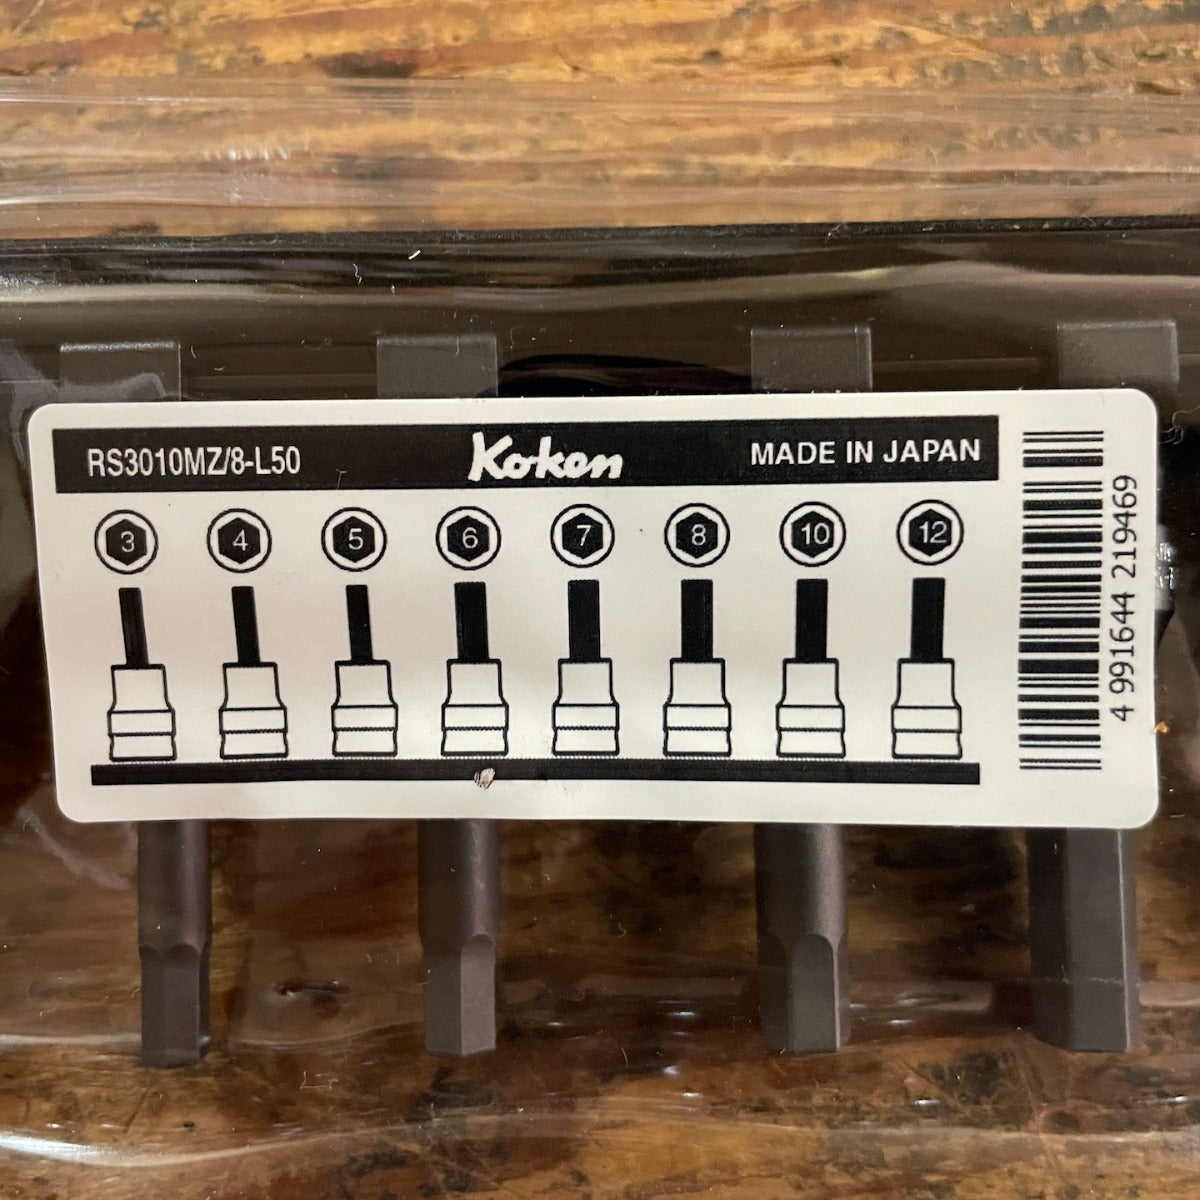 Koken 8 Piece 3/8" Drive Hex Bit Socket Set 3MM-12MM (RS3010MZ/8-L50)